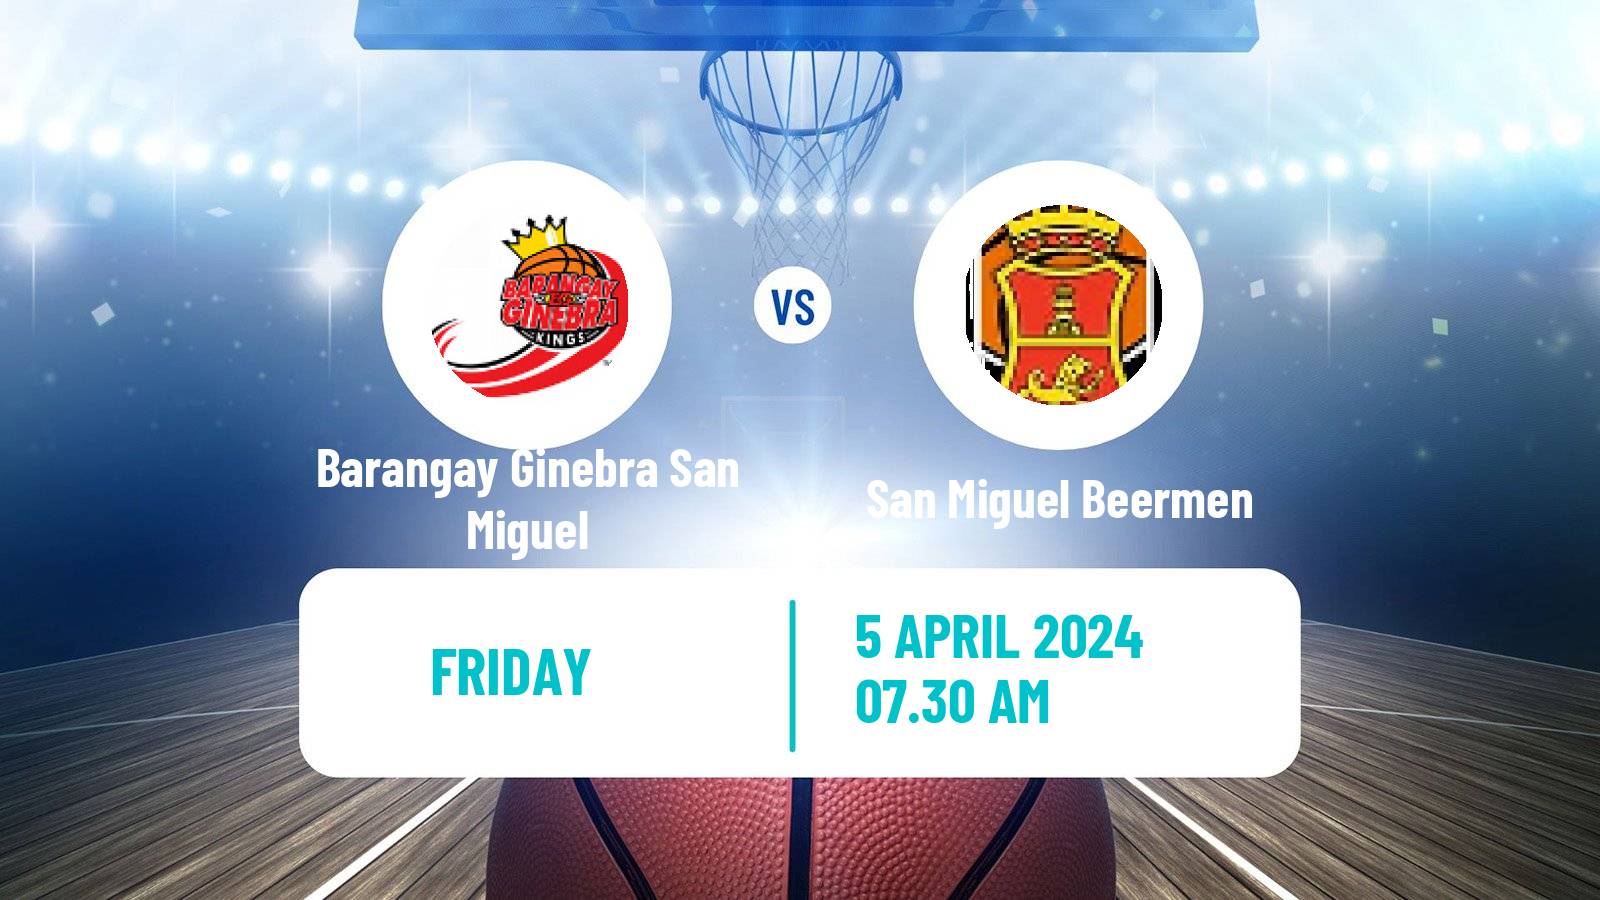 Basketball Philippines Cup Barangay Ginebra San Miguel - San Miguel Beermen